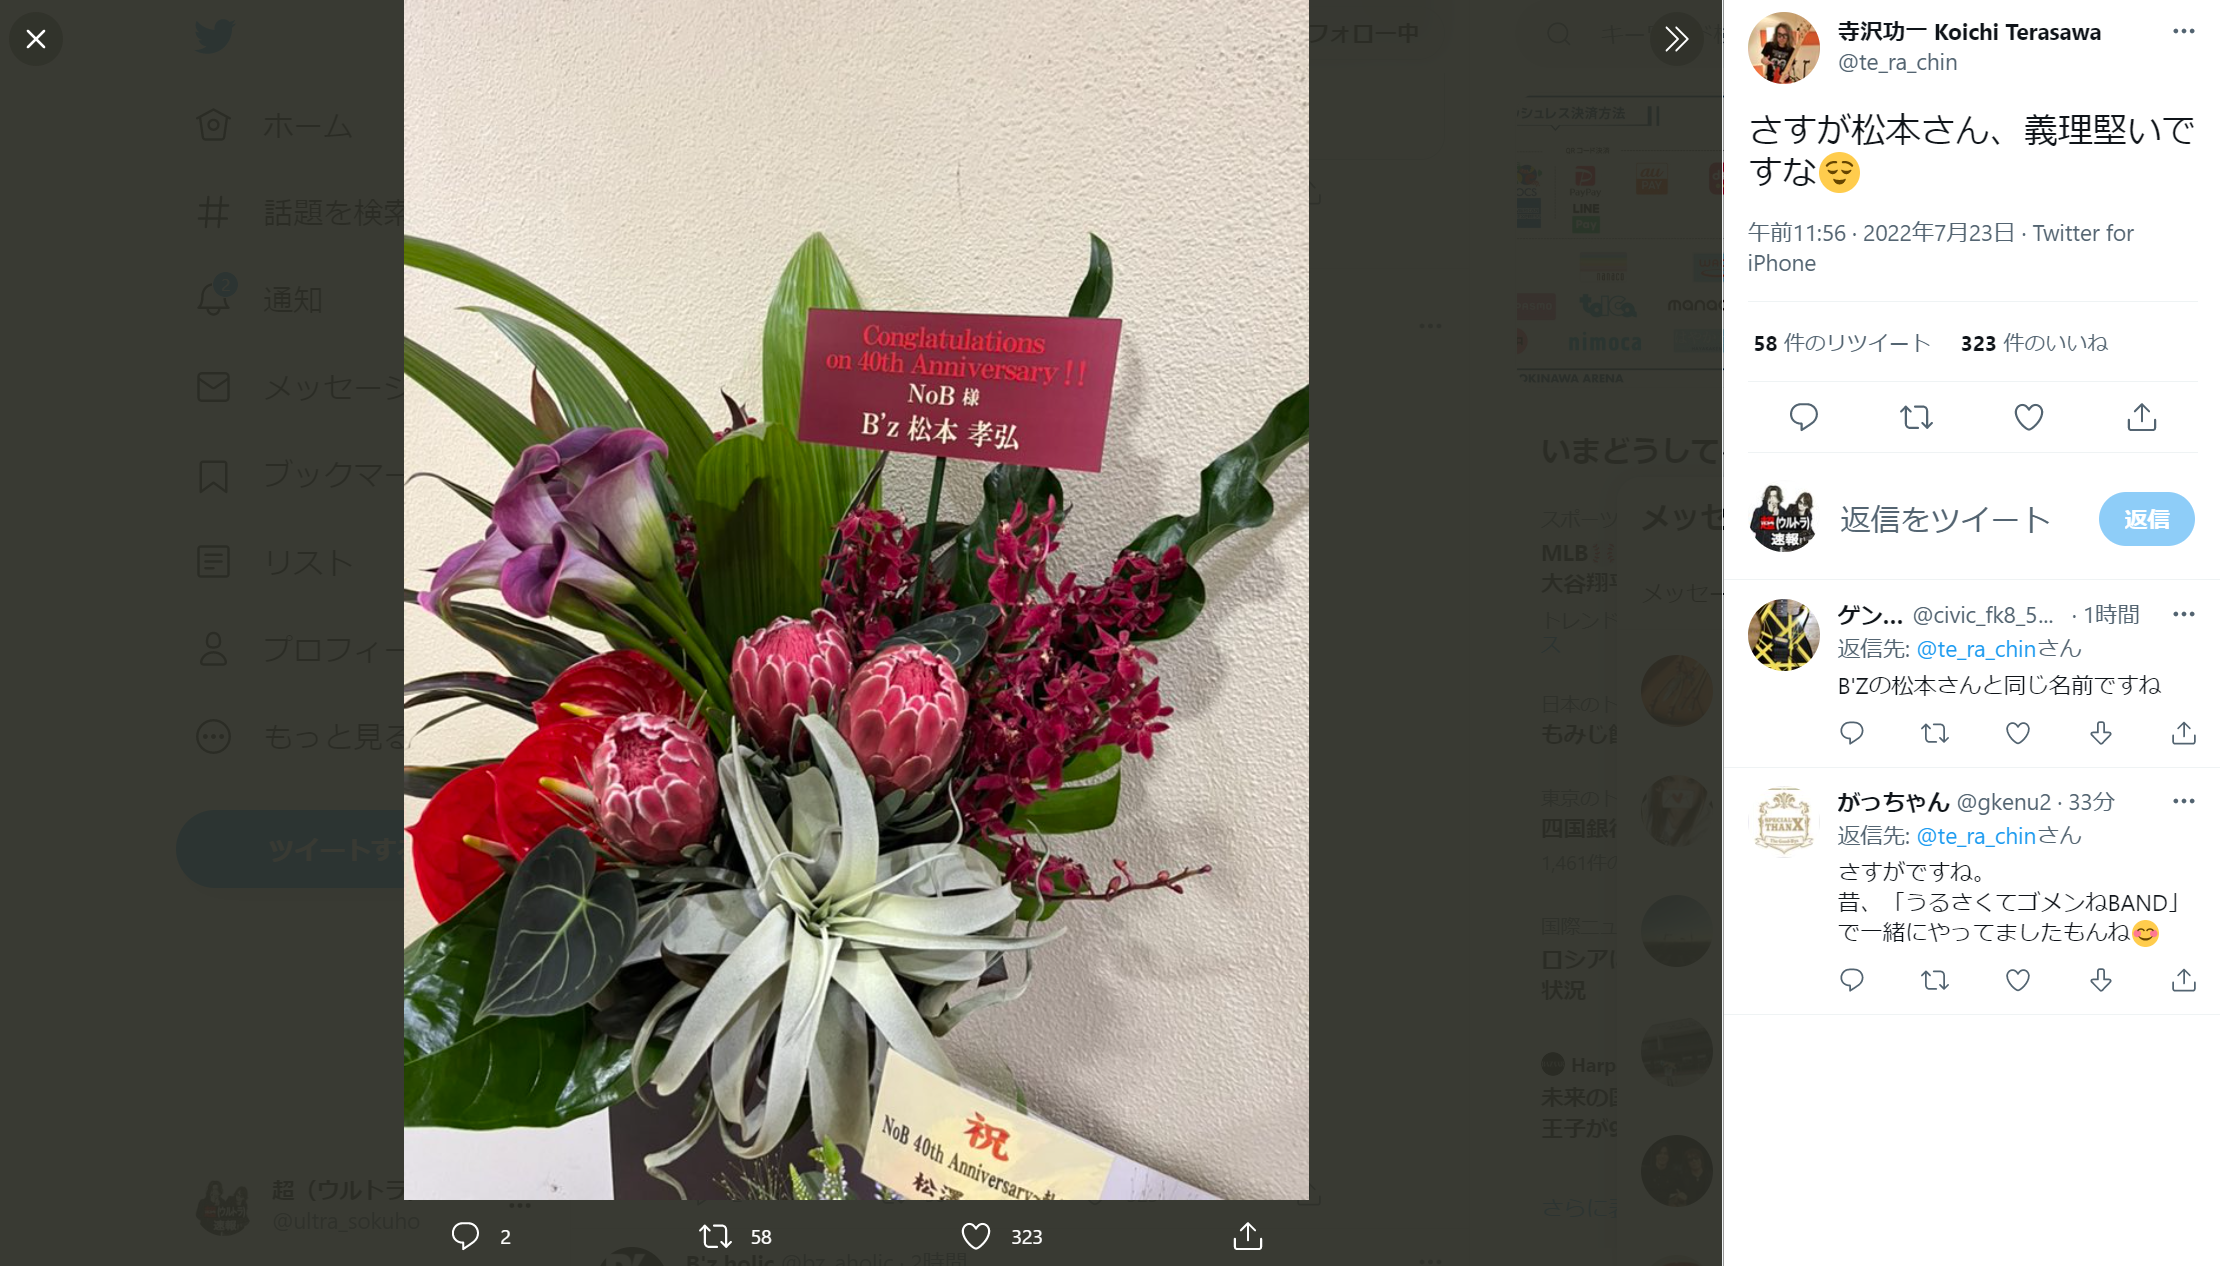 「NoB」こと山田信夫のデビュー40周年を記念したライブに贈られたB'z松本孝弘からの祝花の写真のキャプチャ画像